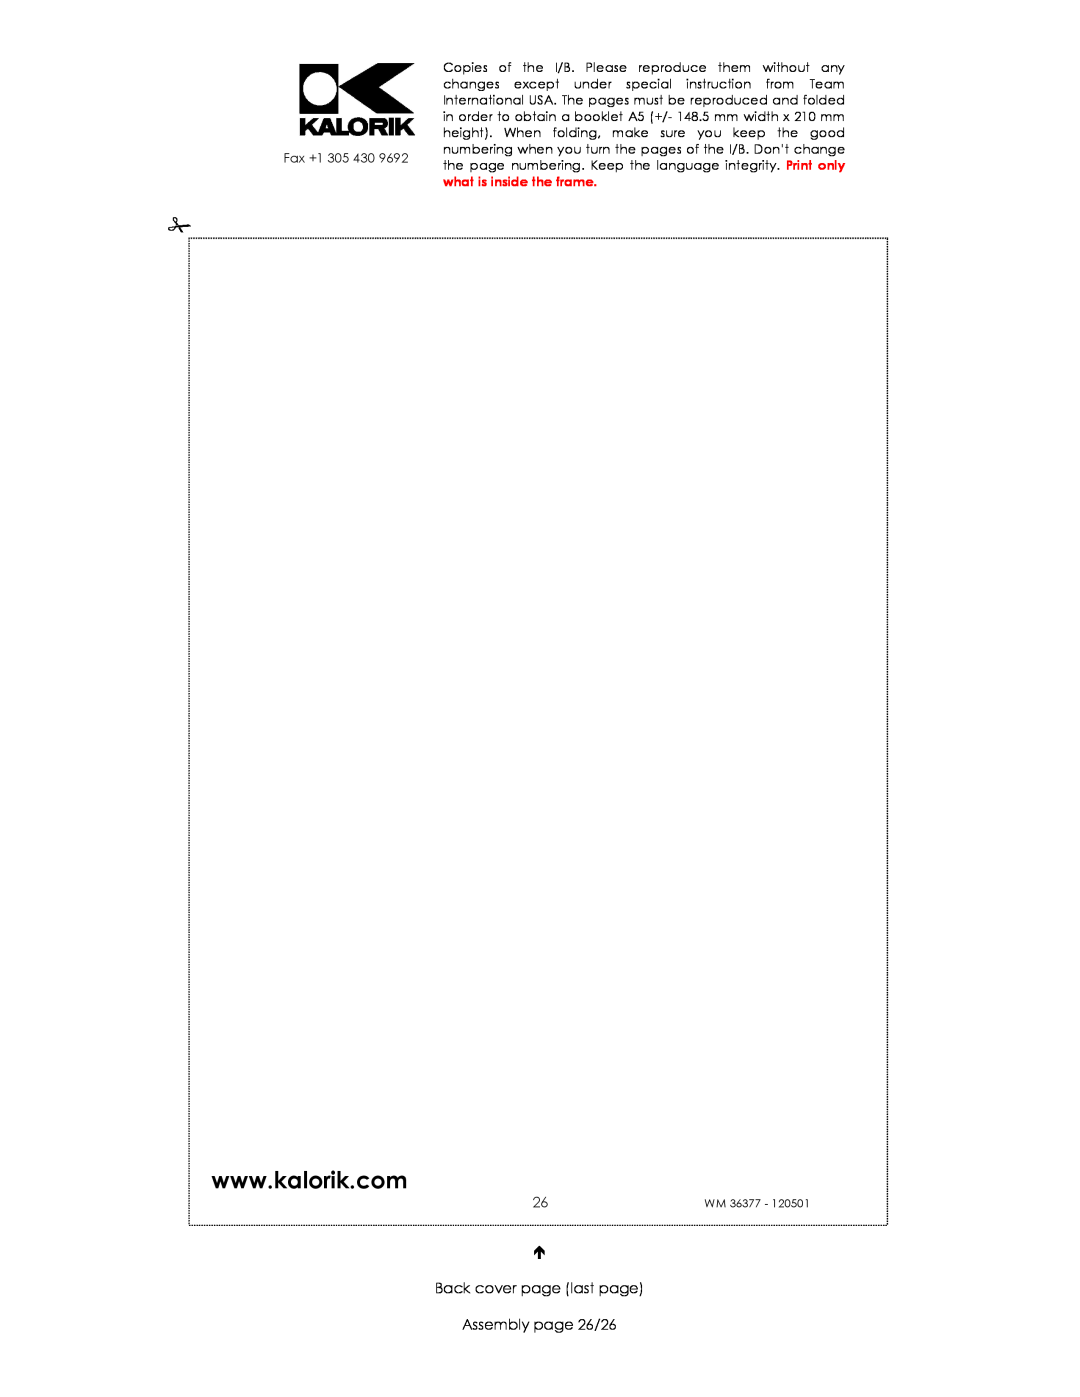 Kalorik WM 36377 manual Back cover page last page Assembly page 26/26 